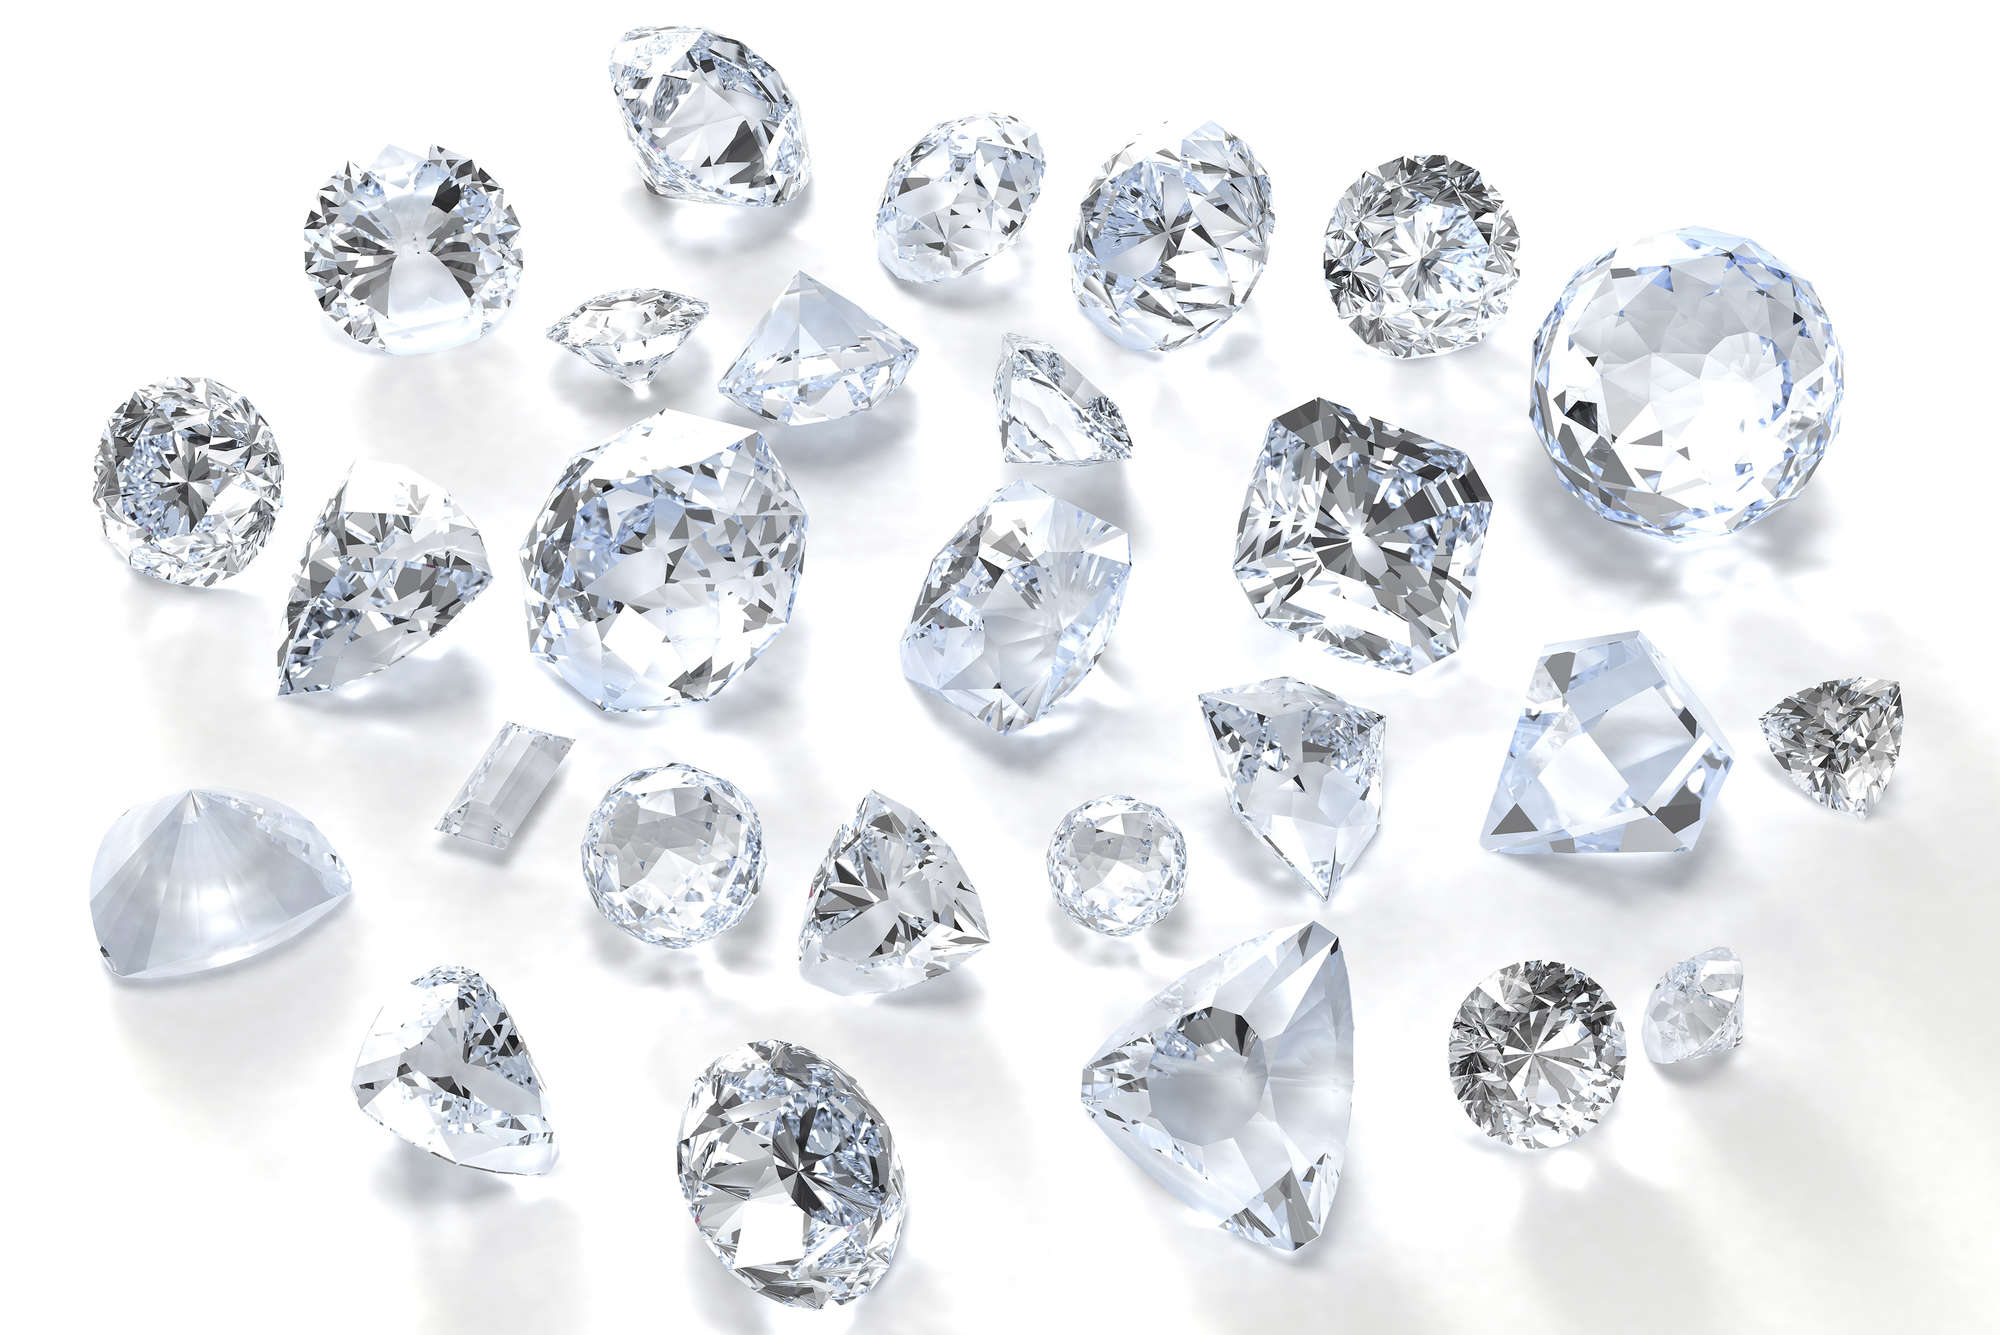             Fototapete geschliffene Diamanten – Mattes Glattvlies
        